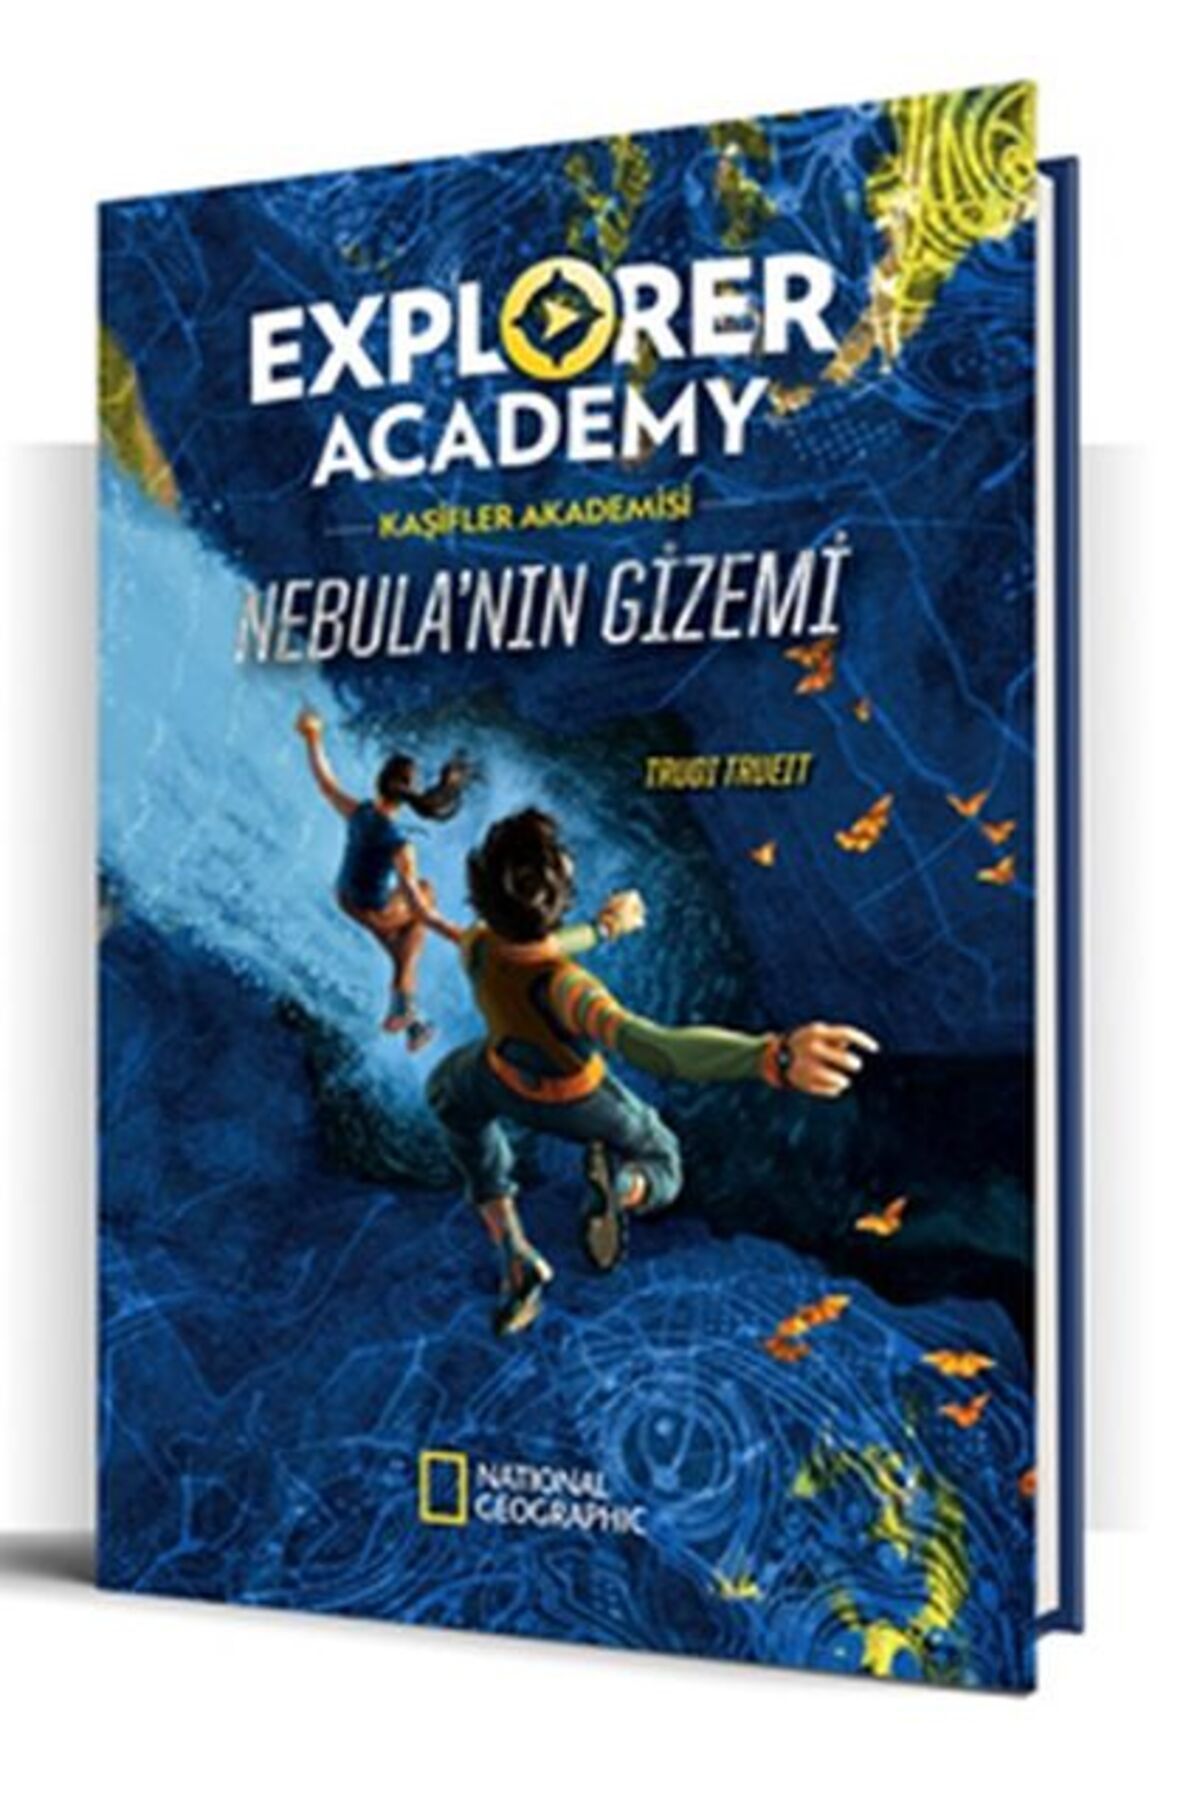 National Geographic Kaşifler Akademisi Nebula nın Gizemi